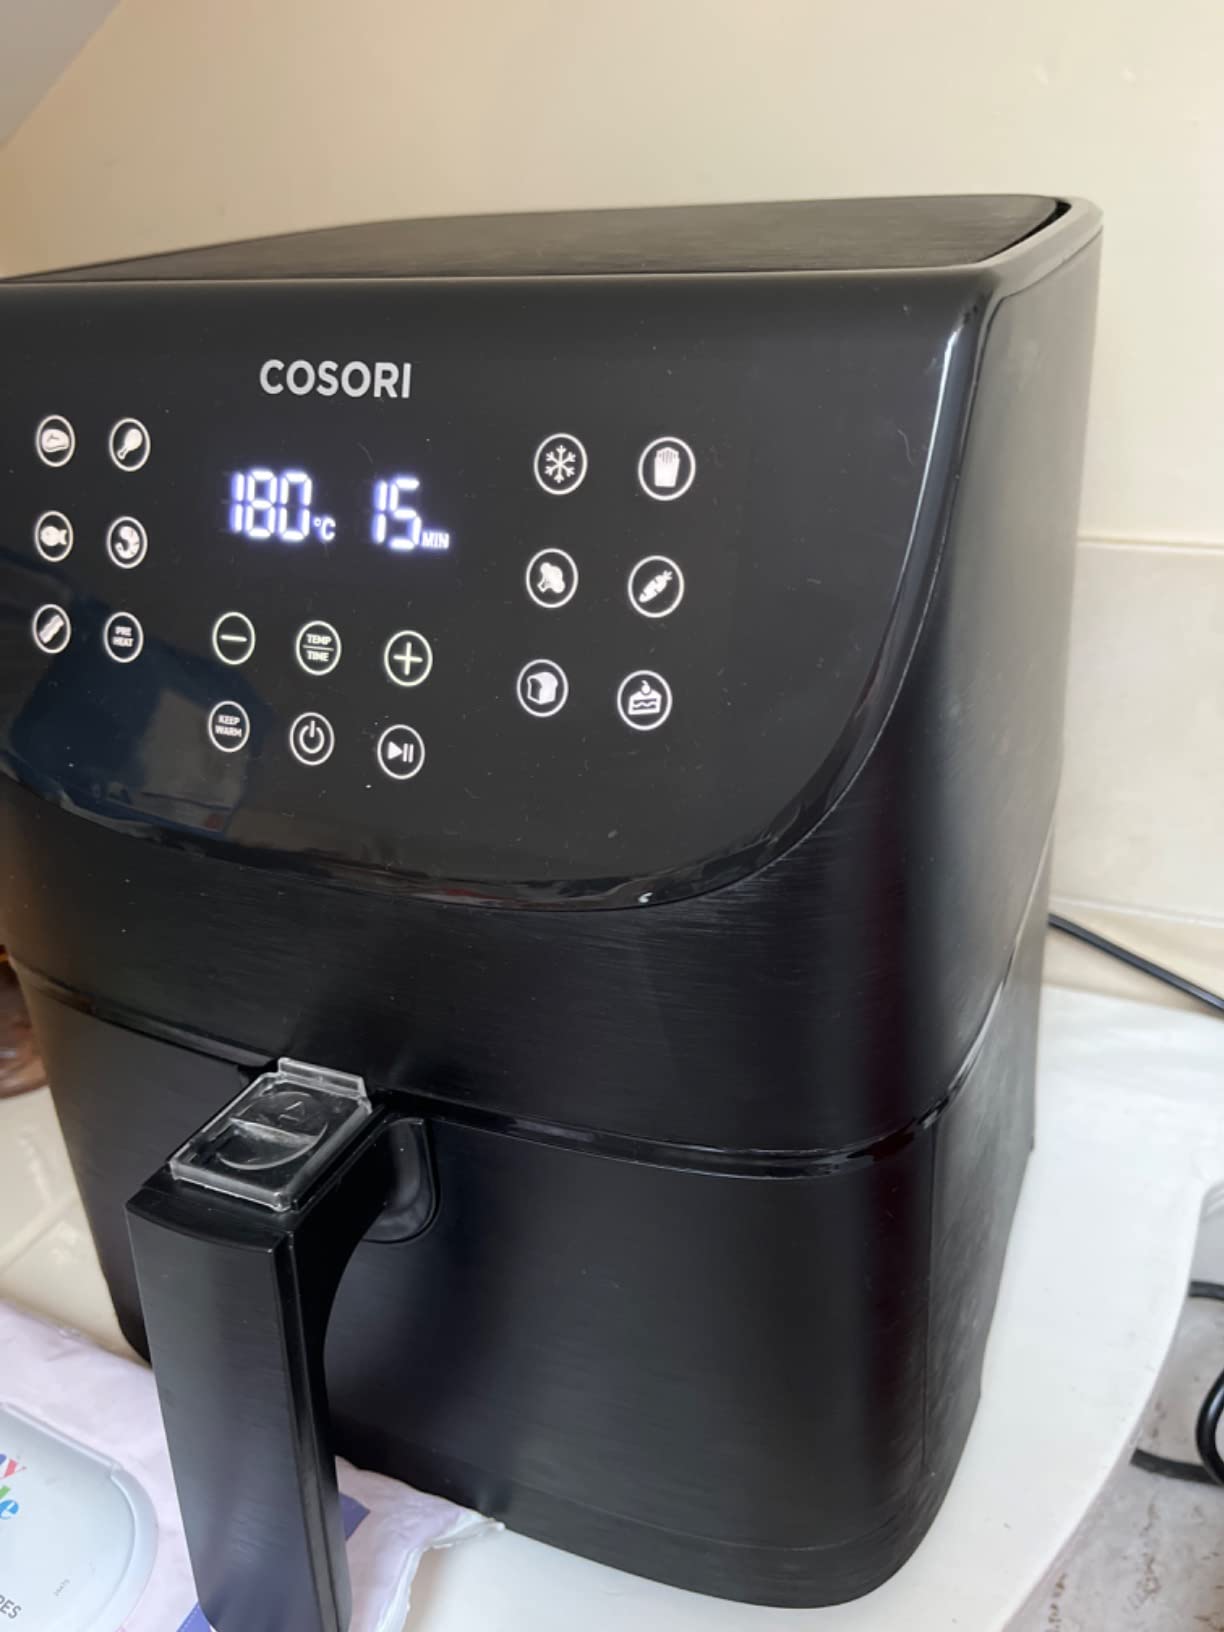  Cosori cp137 air fryer 3.5litre